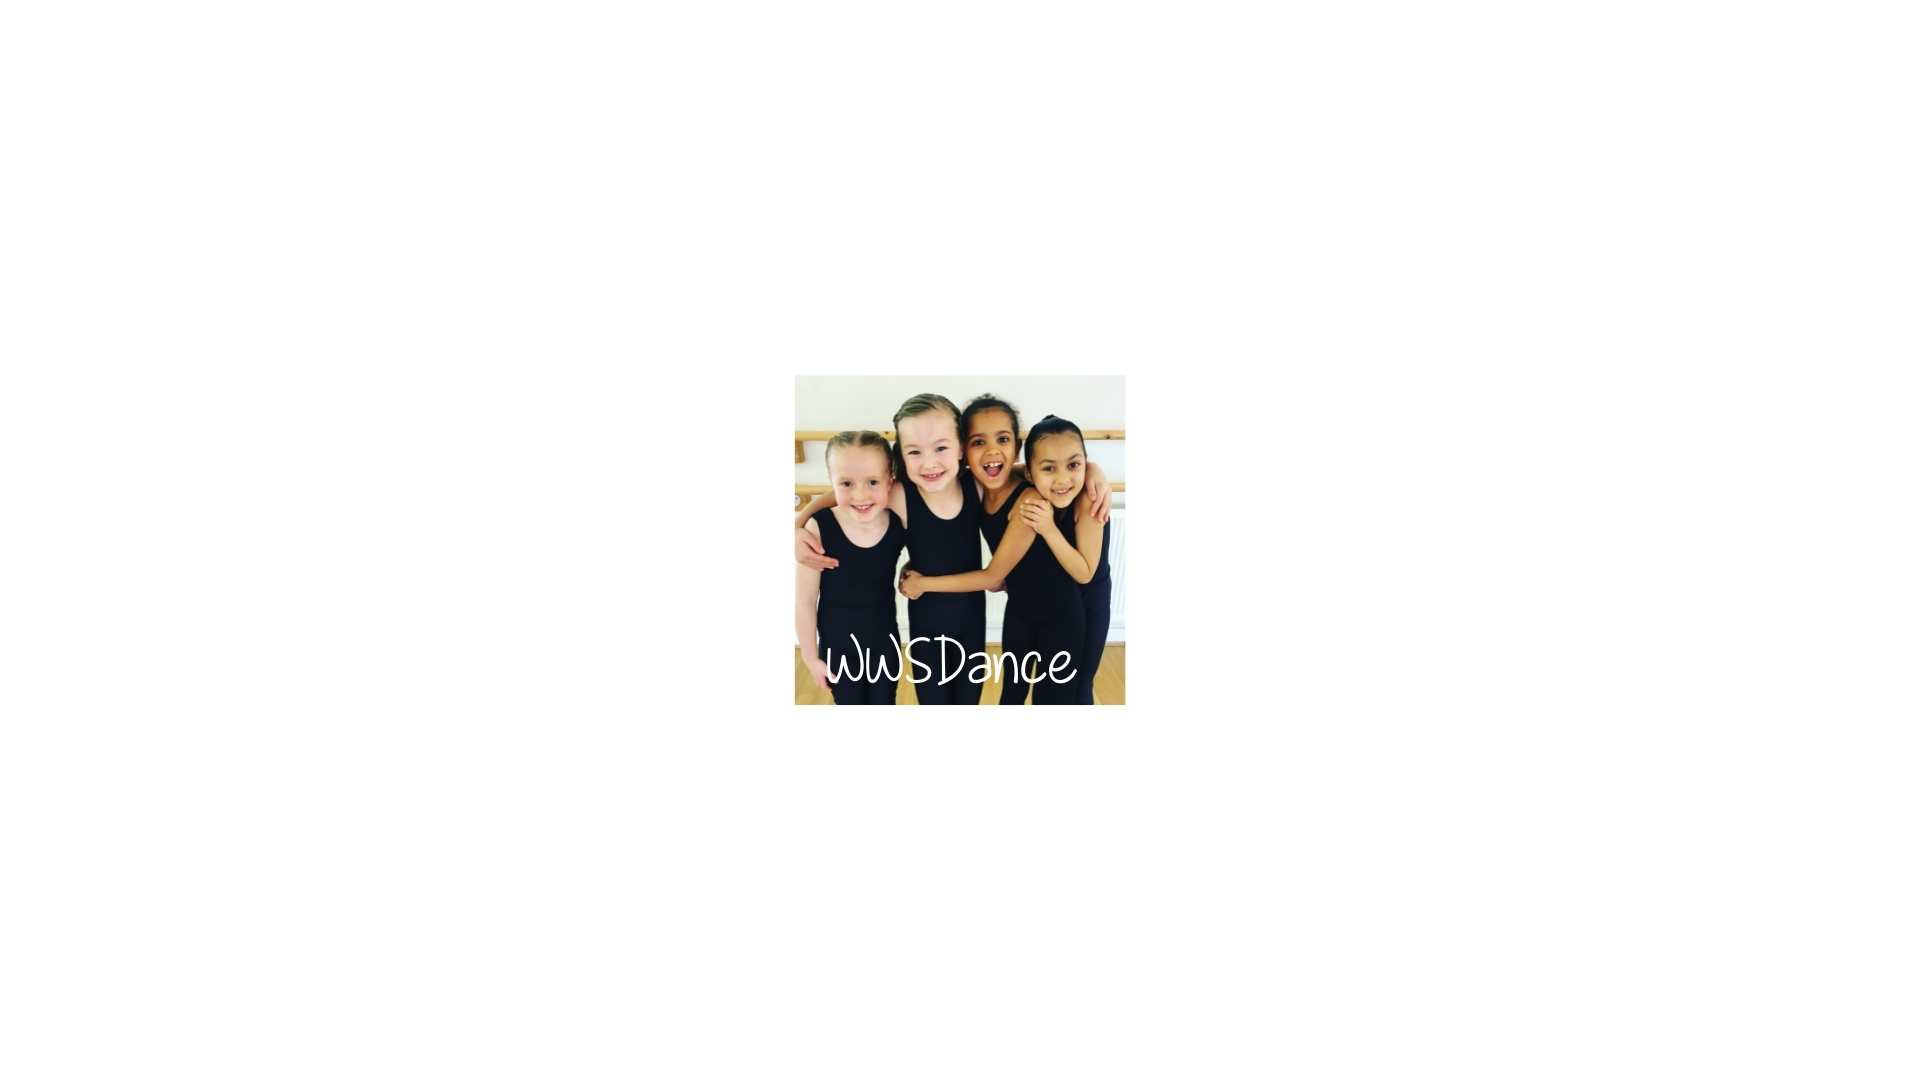 Wendy Whatling School of Dance (WWSDance)'s logo